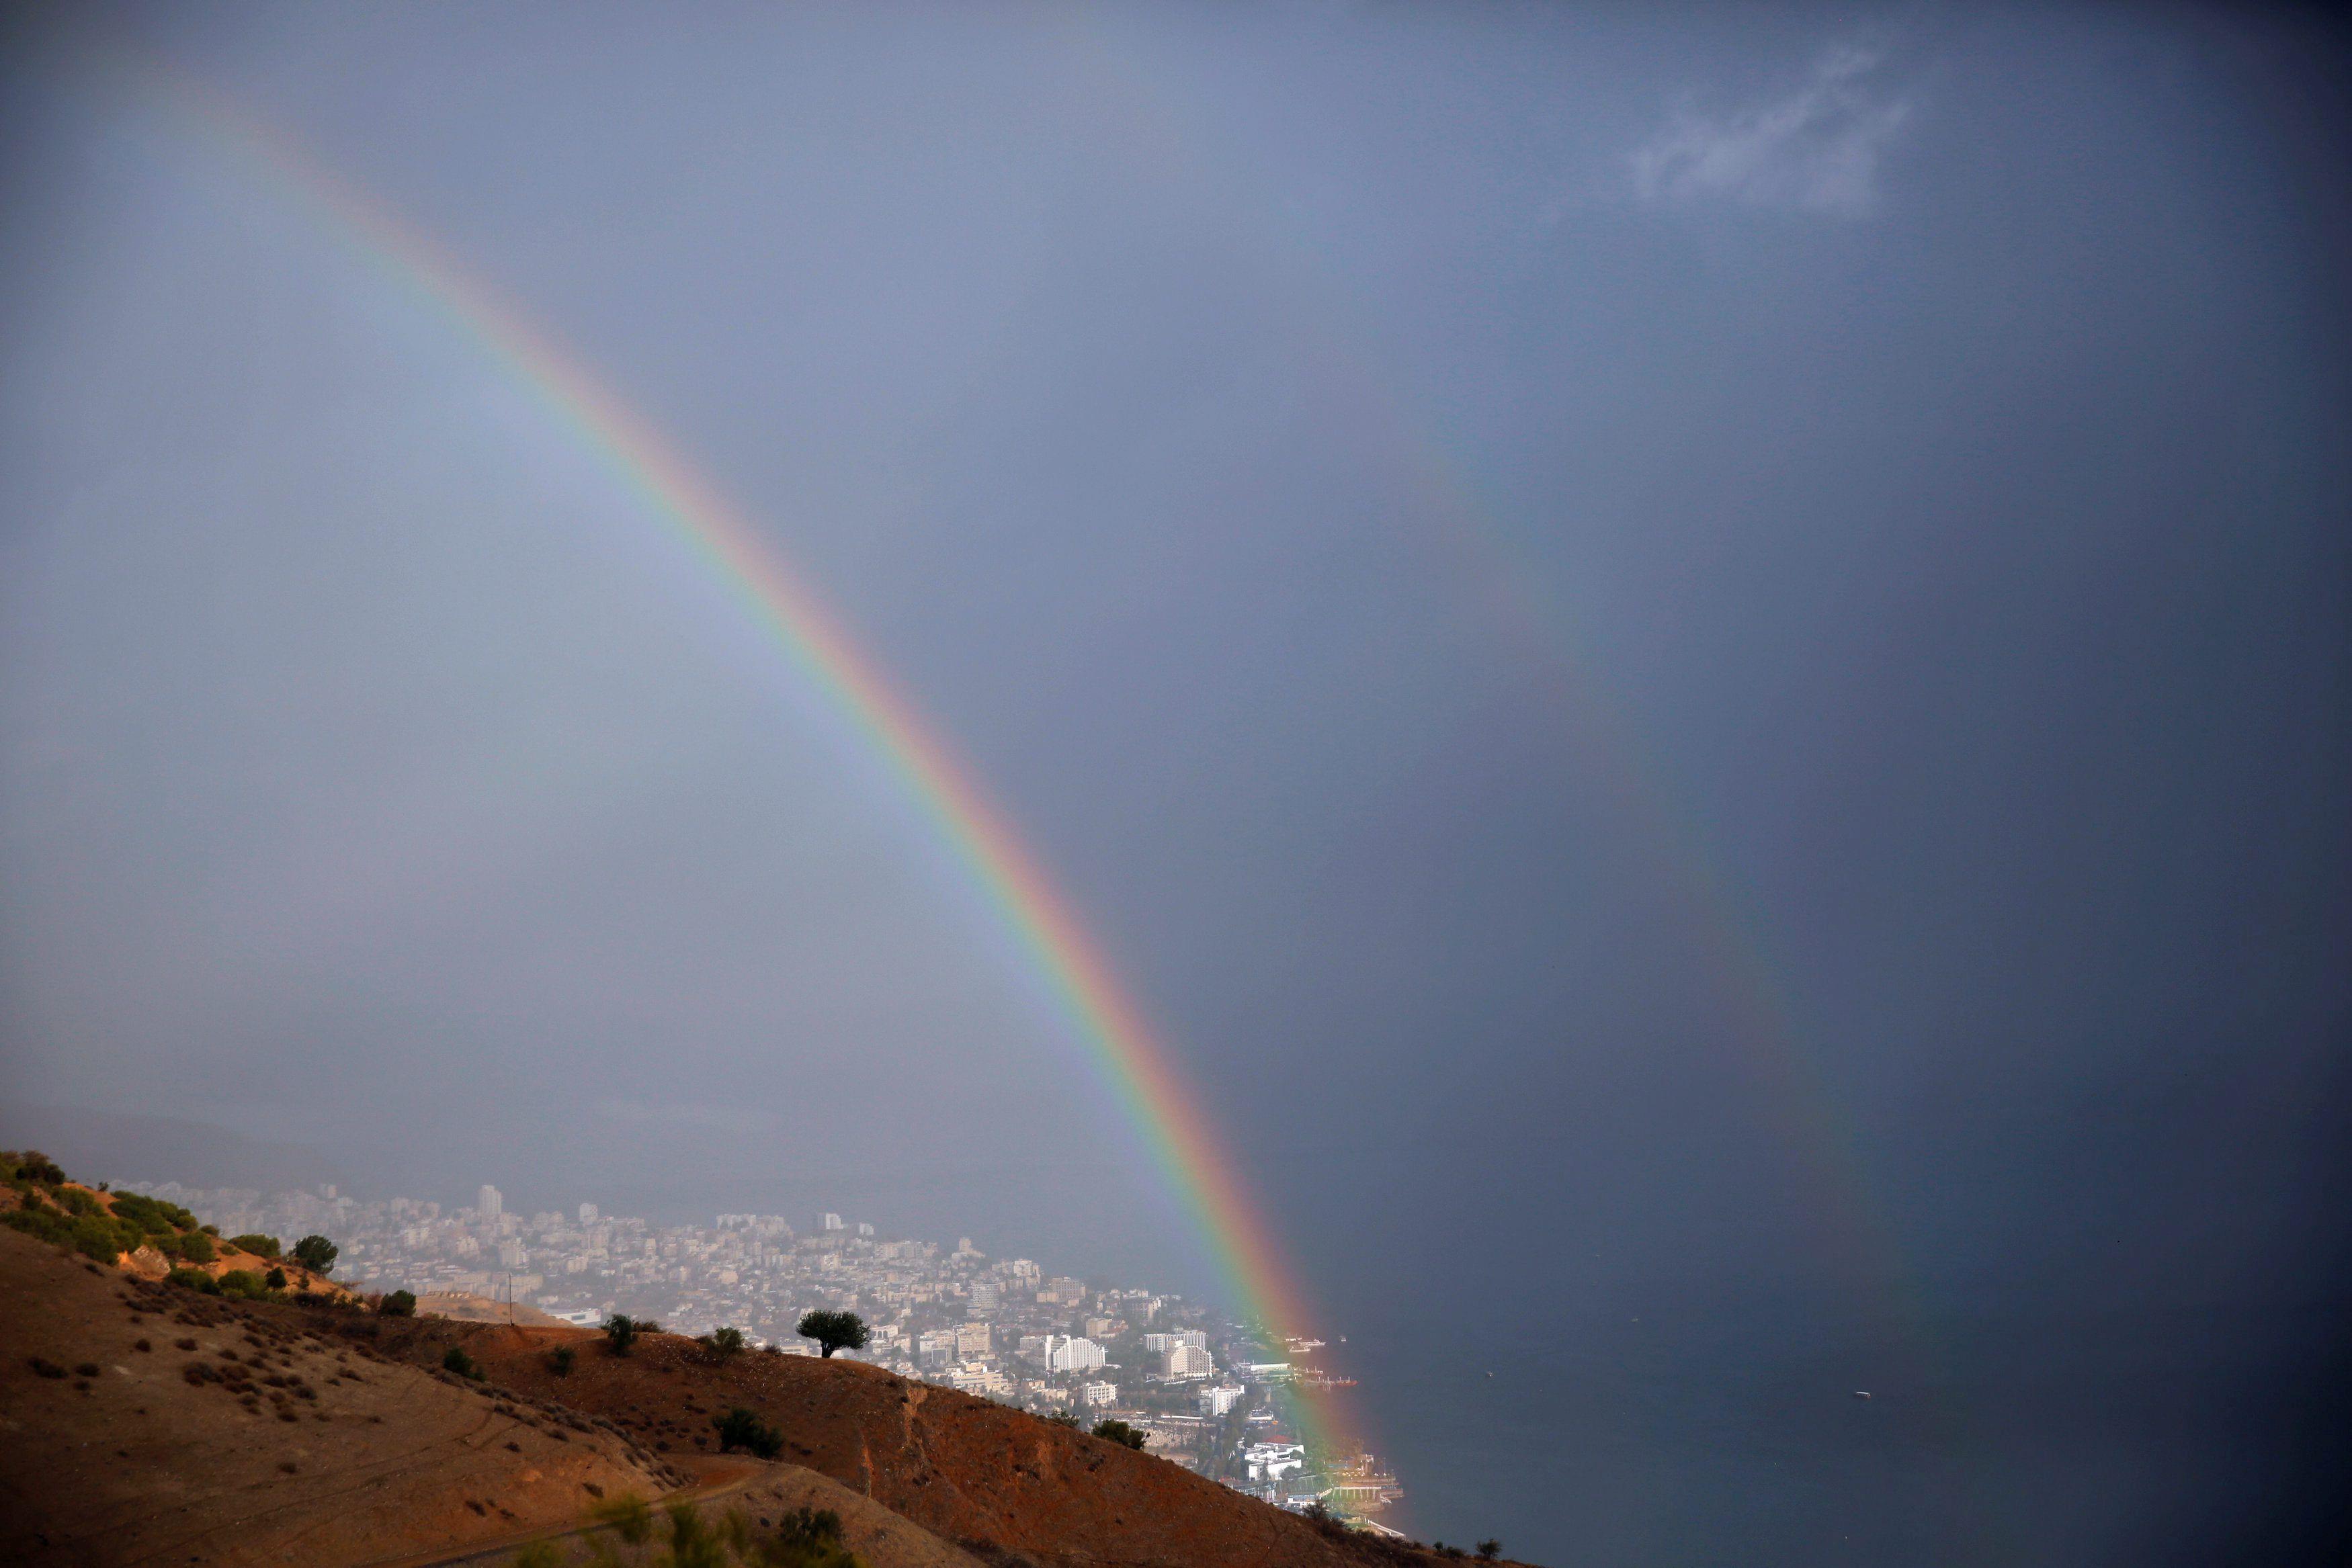 The Wider Image: The Sea of Galilee: receding waters of biblical lake